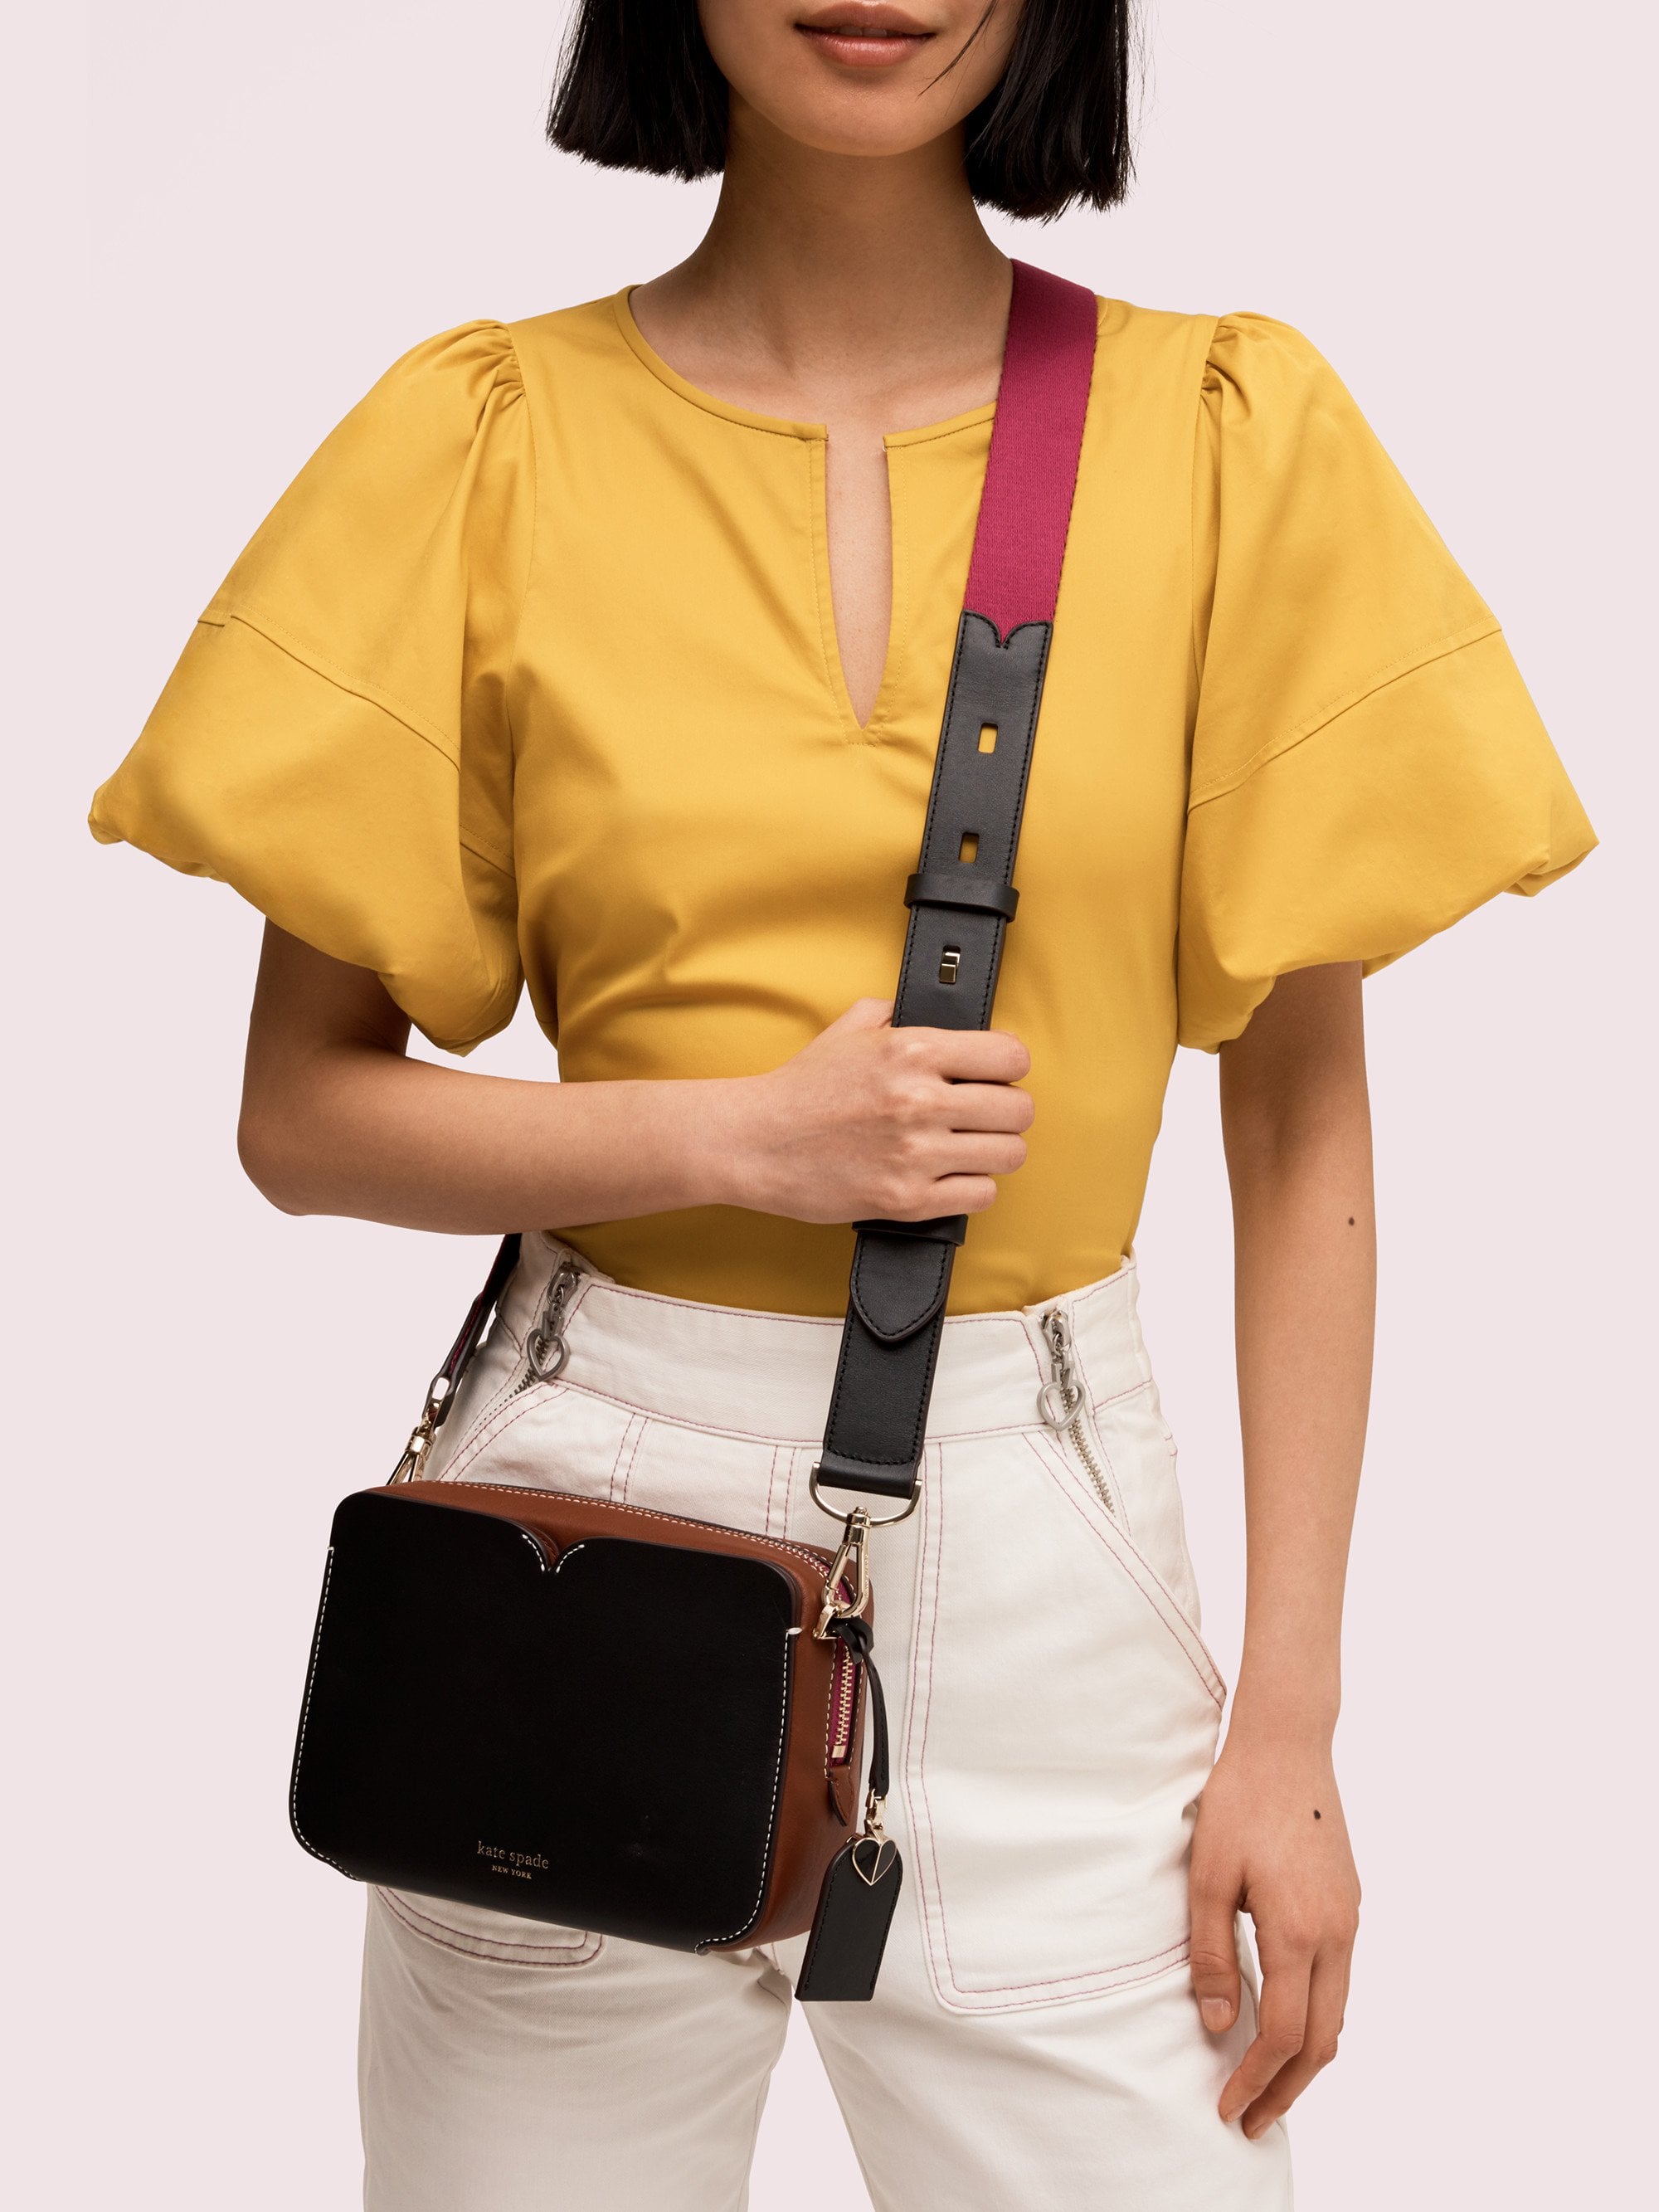 Kate Spade New York Fall Products 2019 | POPSUGAR Fashion